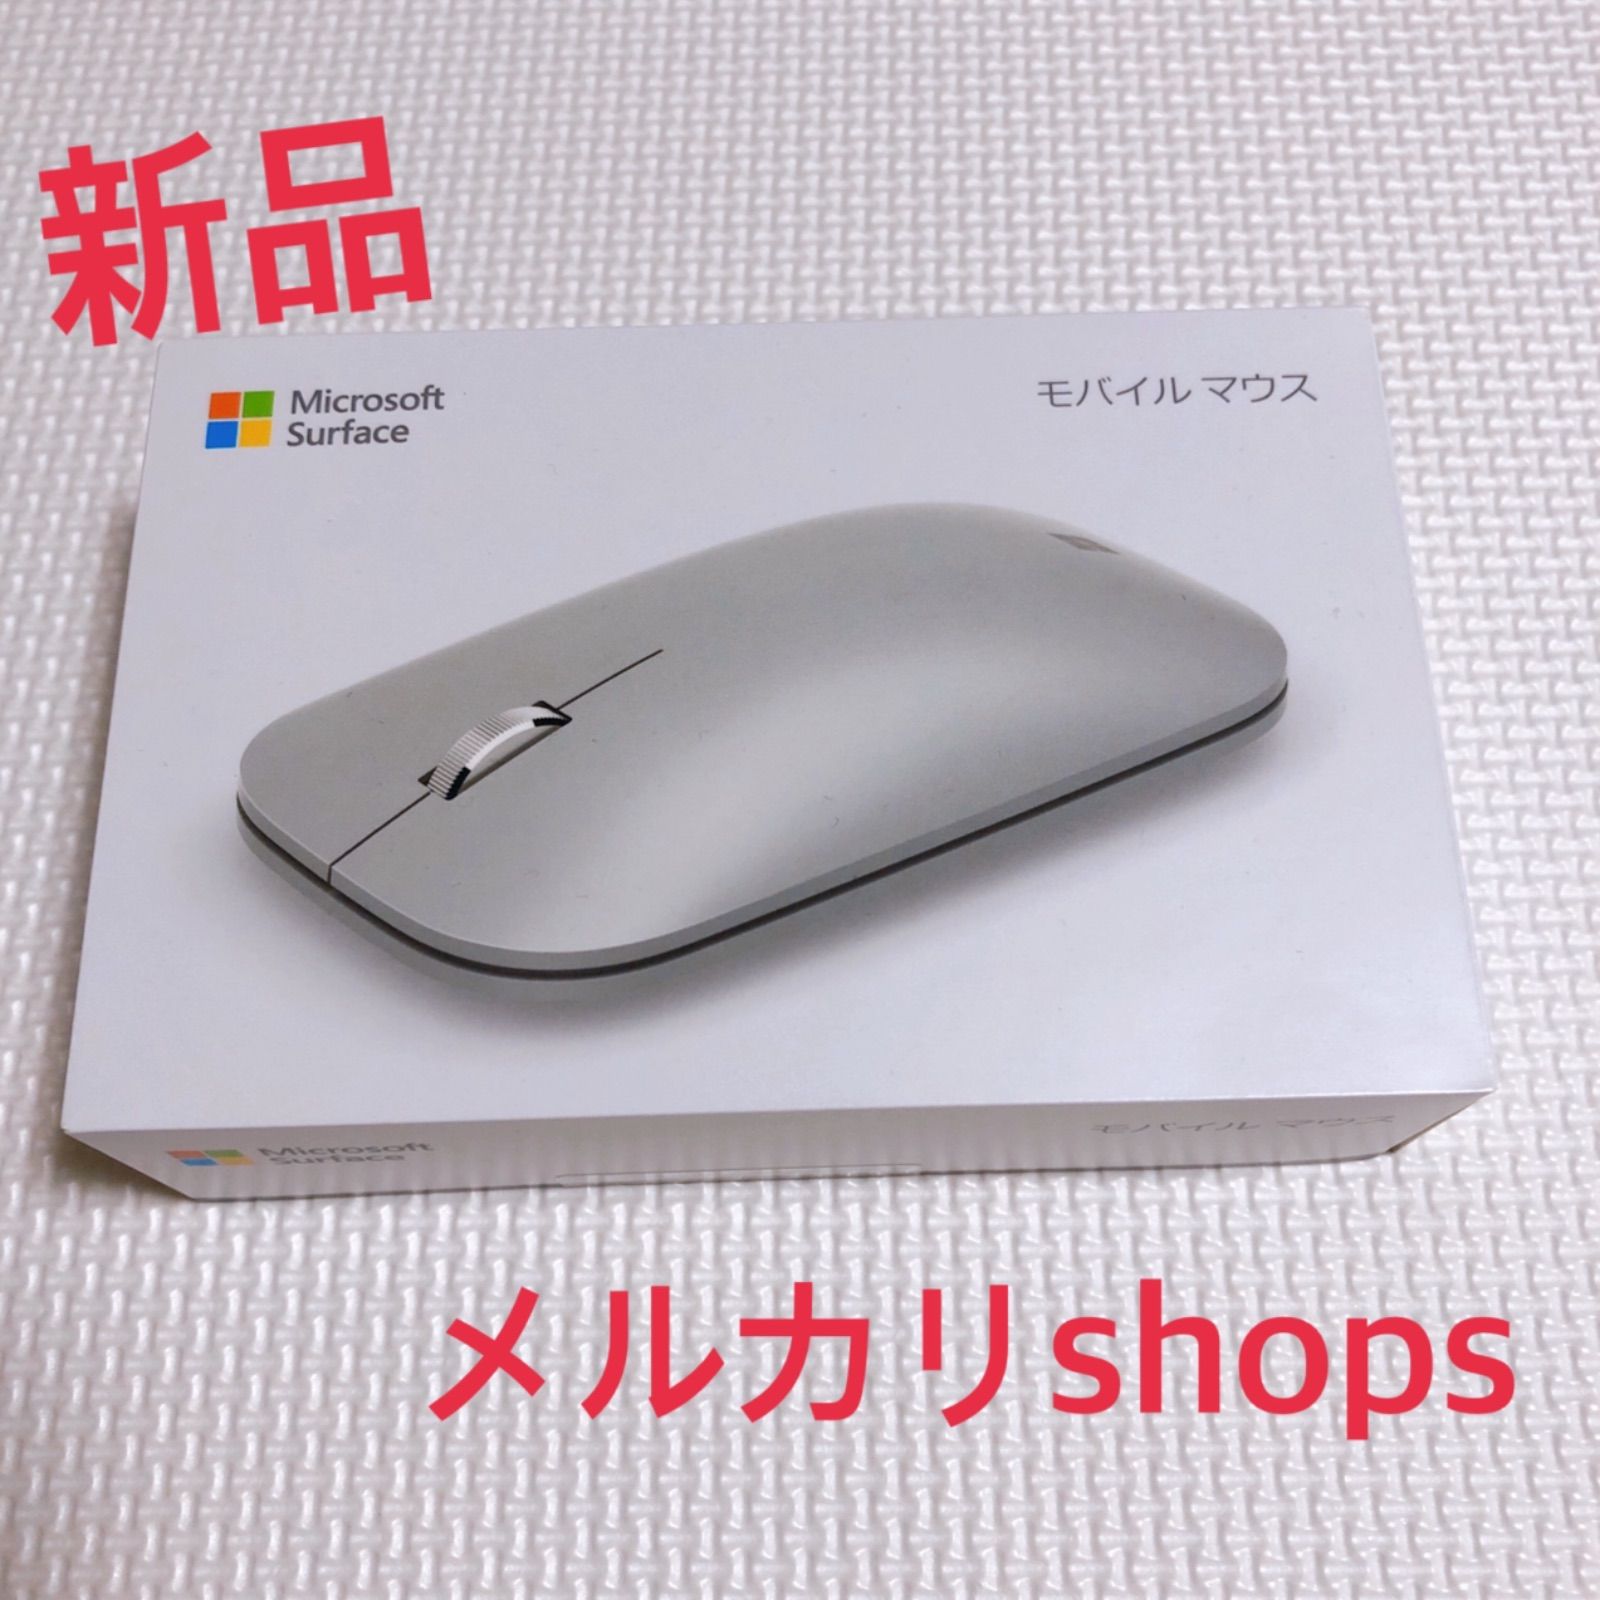 KGY-00007 マイクロソフト Surface モバイルマウス グレー